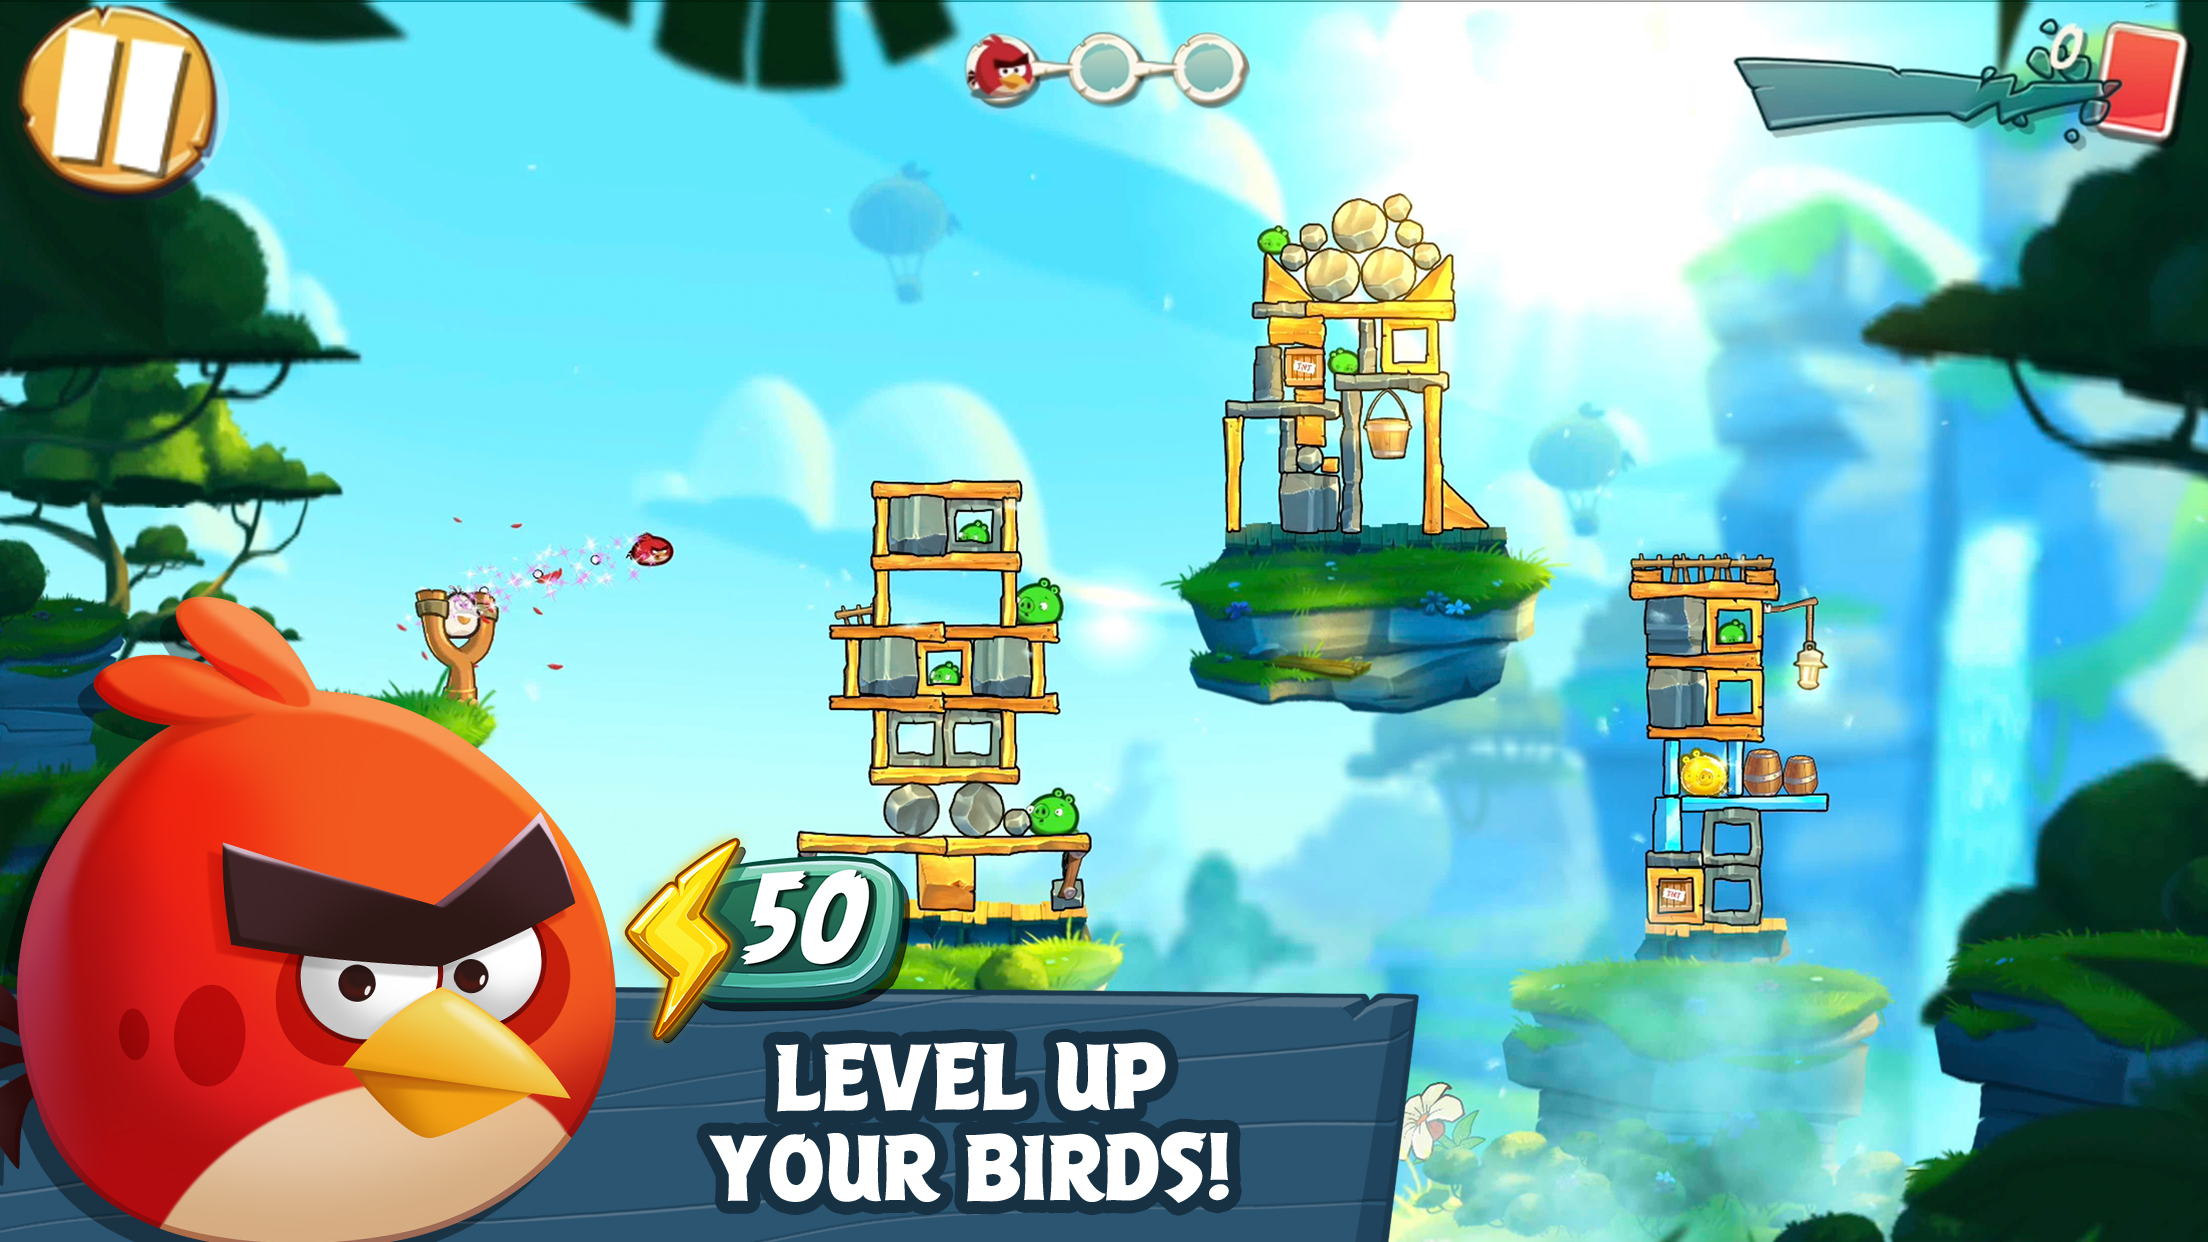 Download & Play Angry Birds Star Wars II Free on PC & Mac (Emulator)